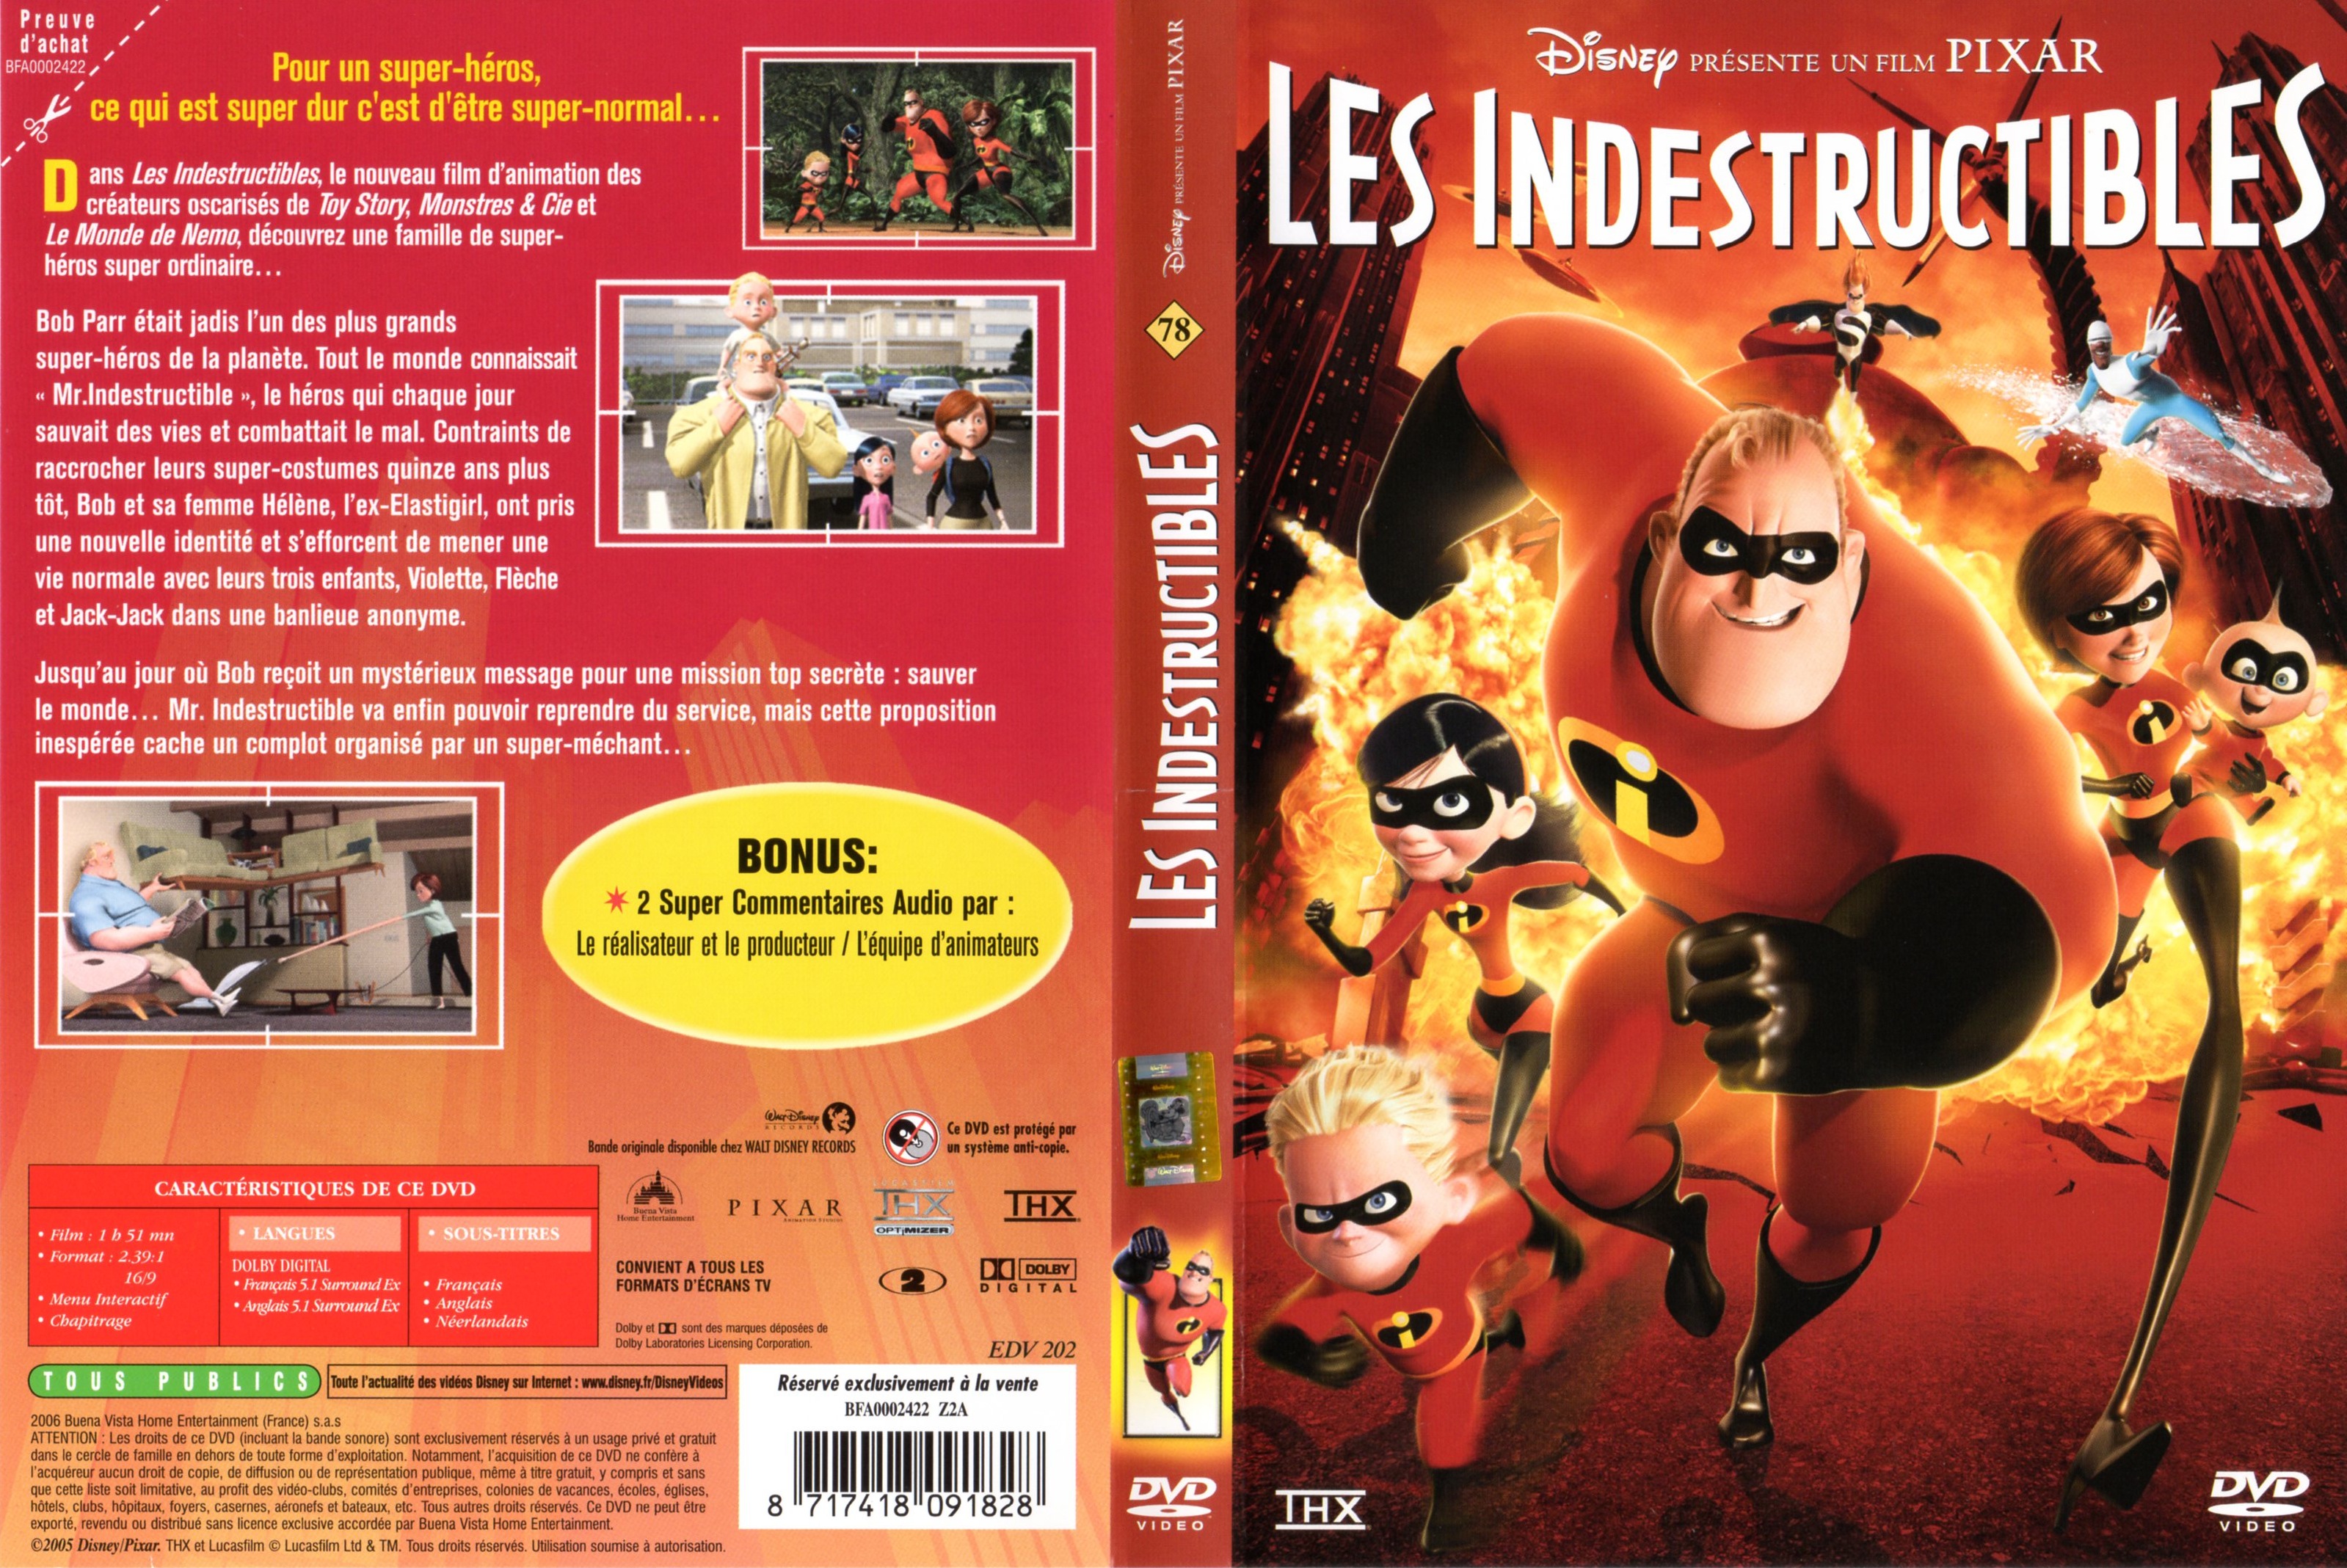 Jaquette DVD Les indestructibles v4